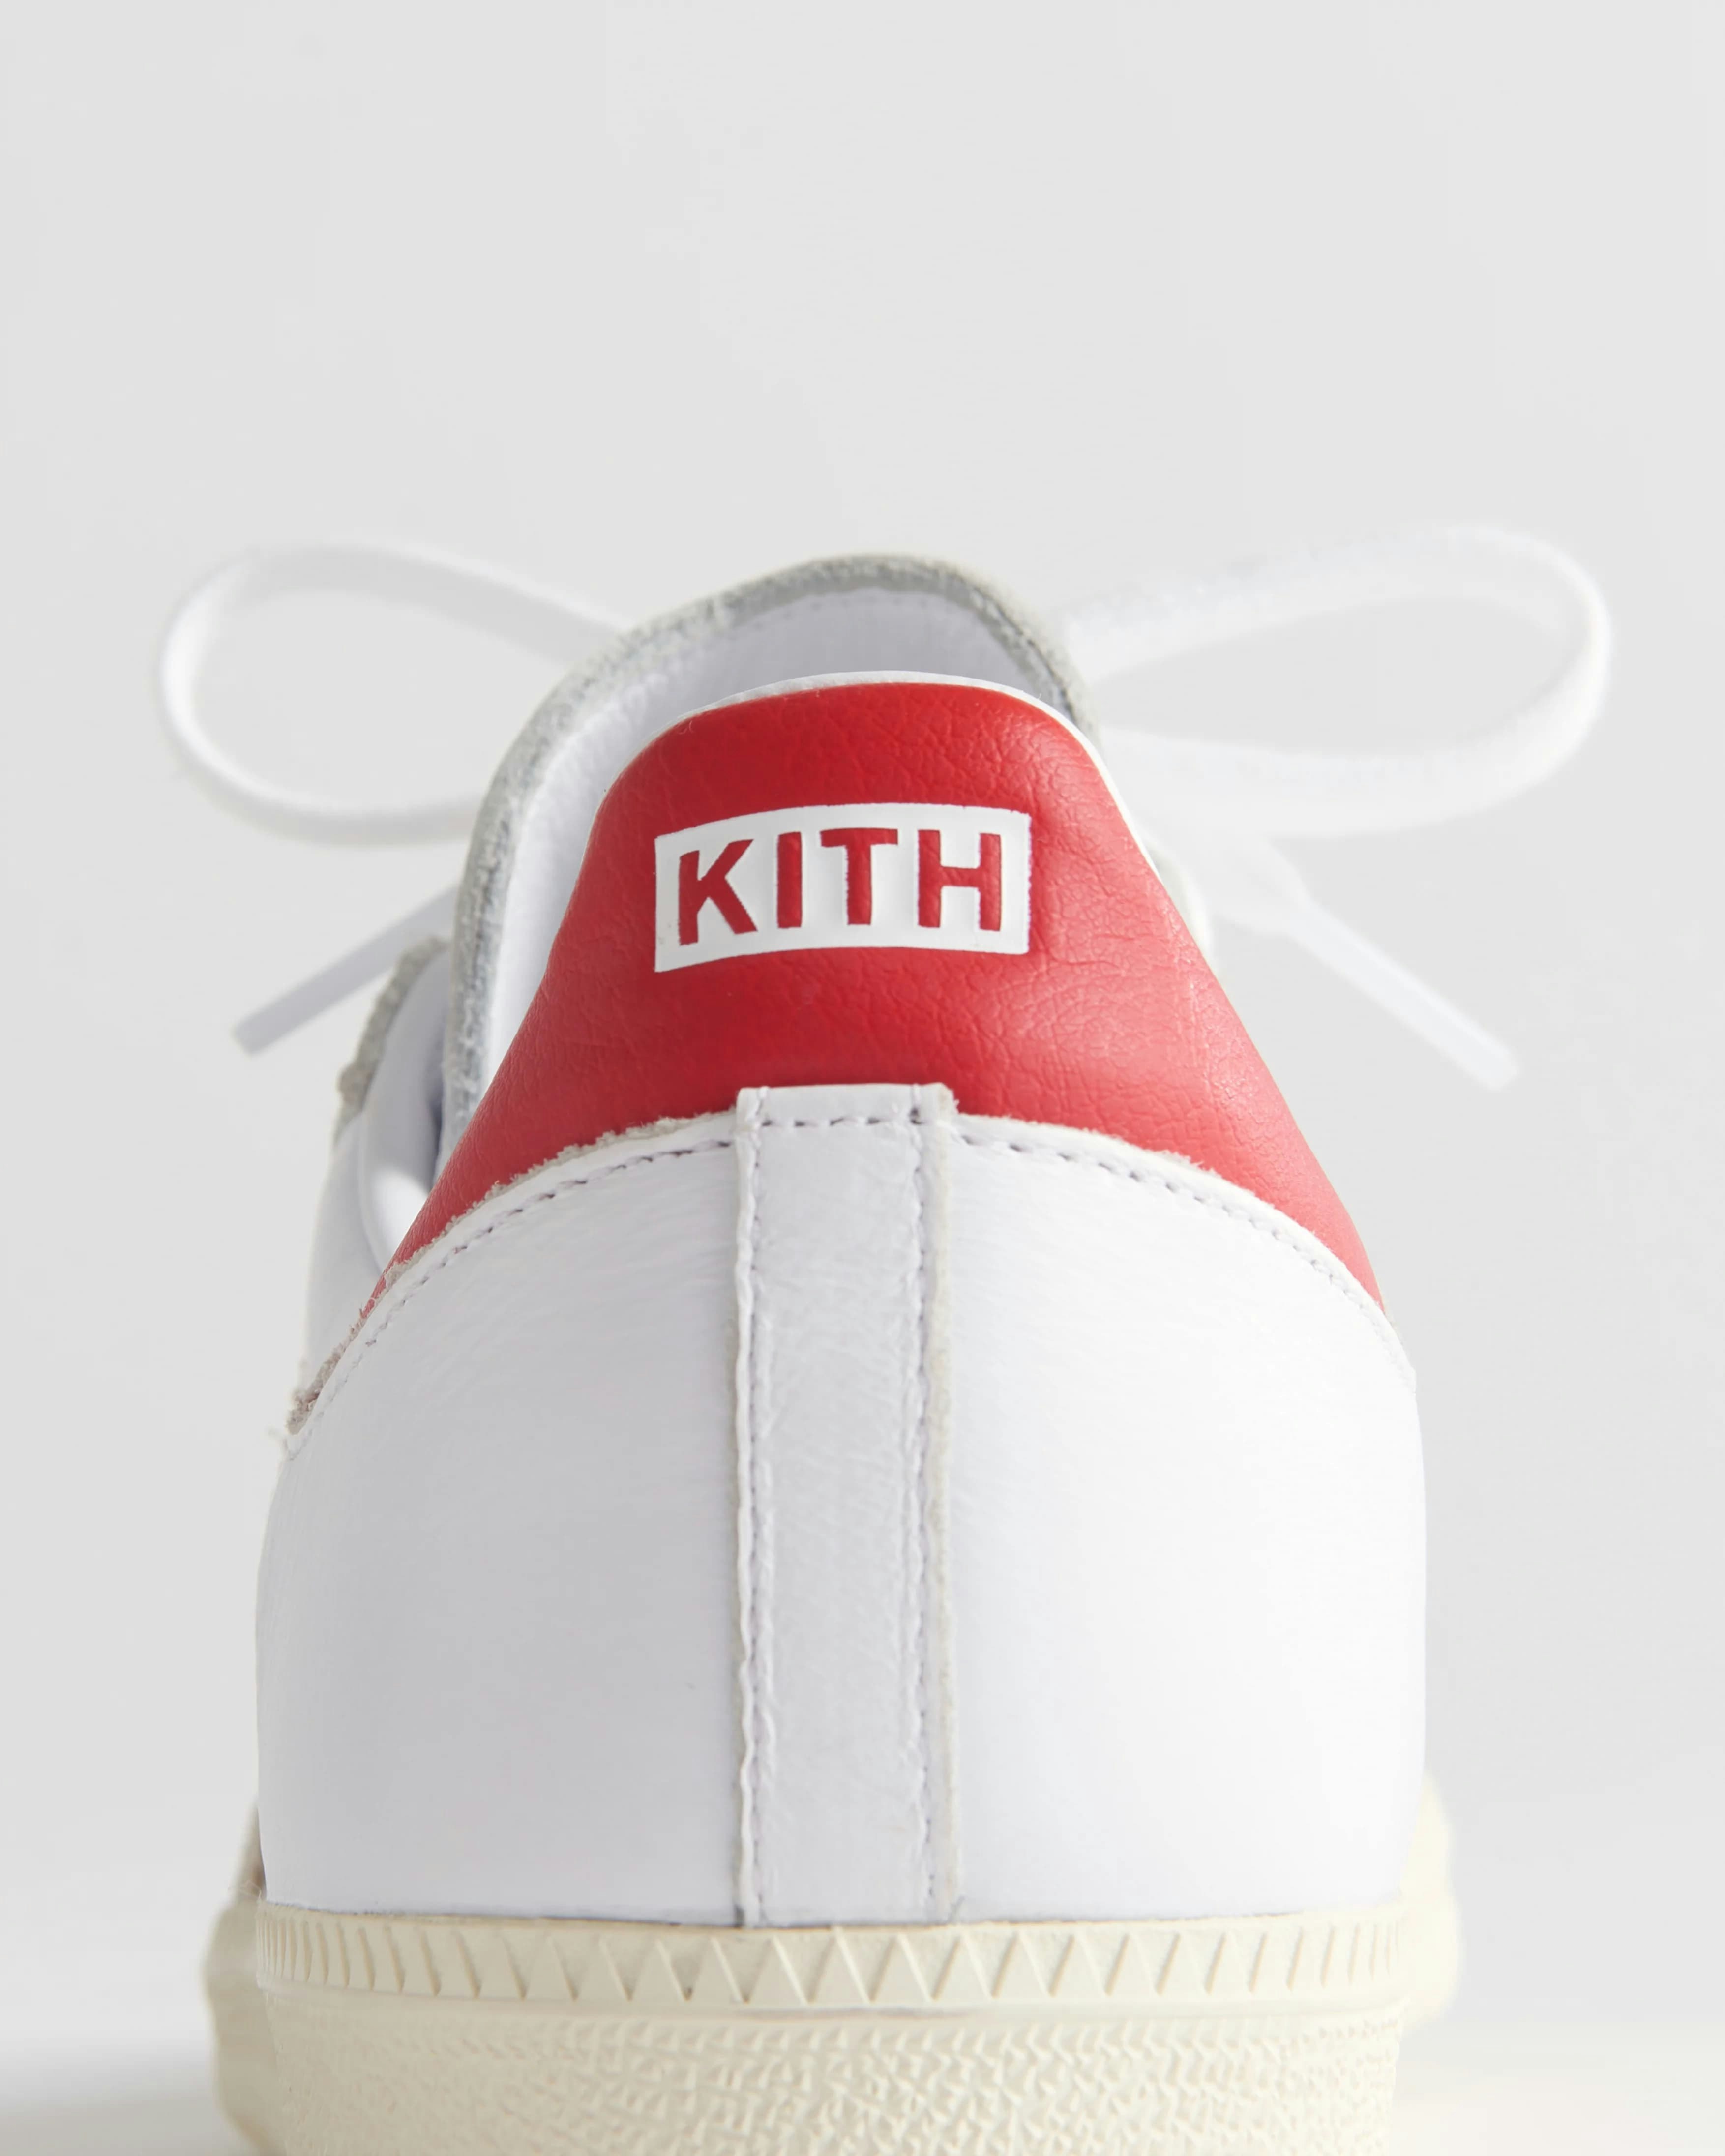 Kith x adidas Samba "White/Red"